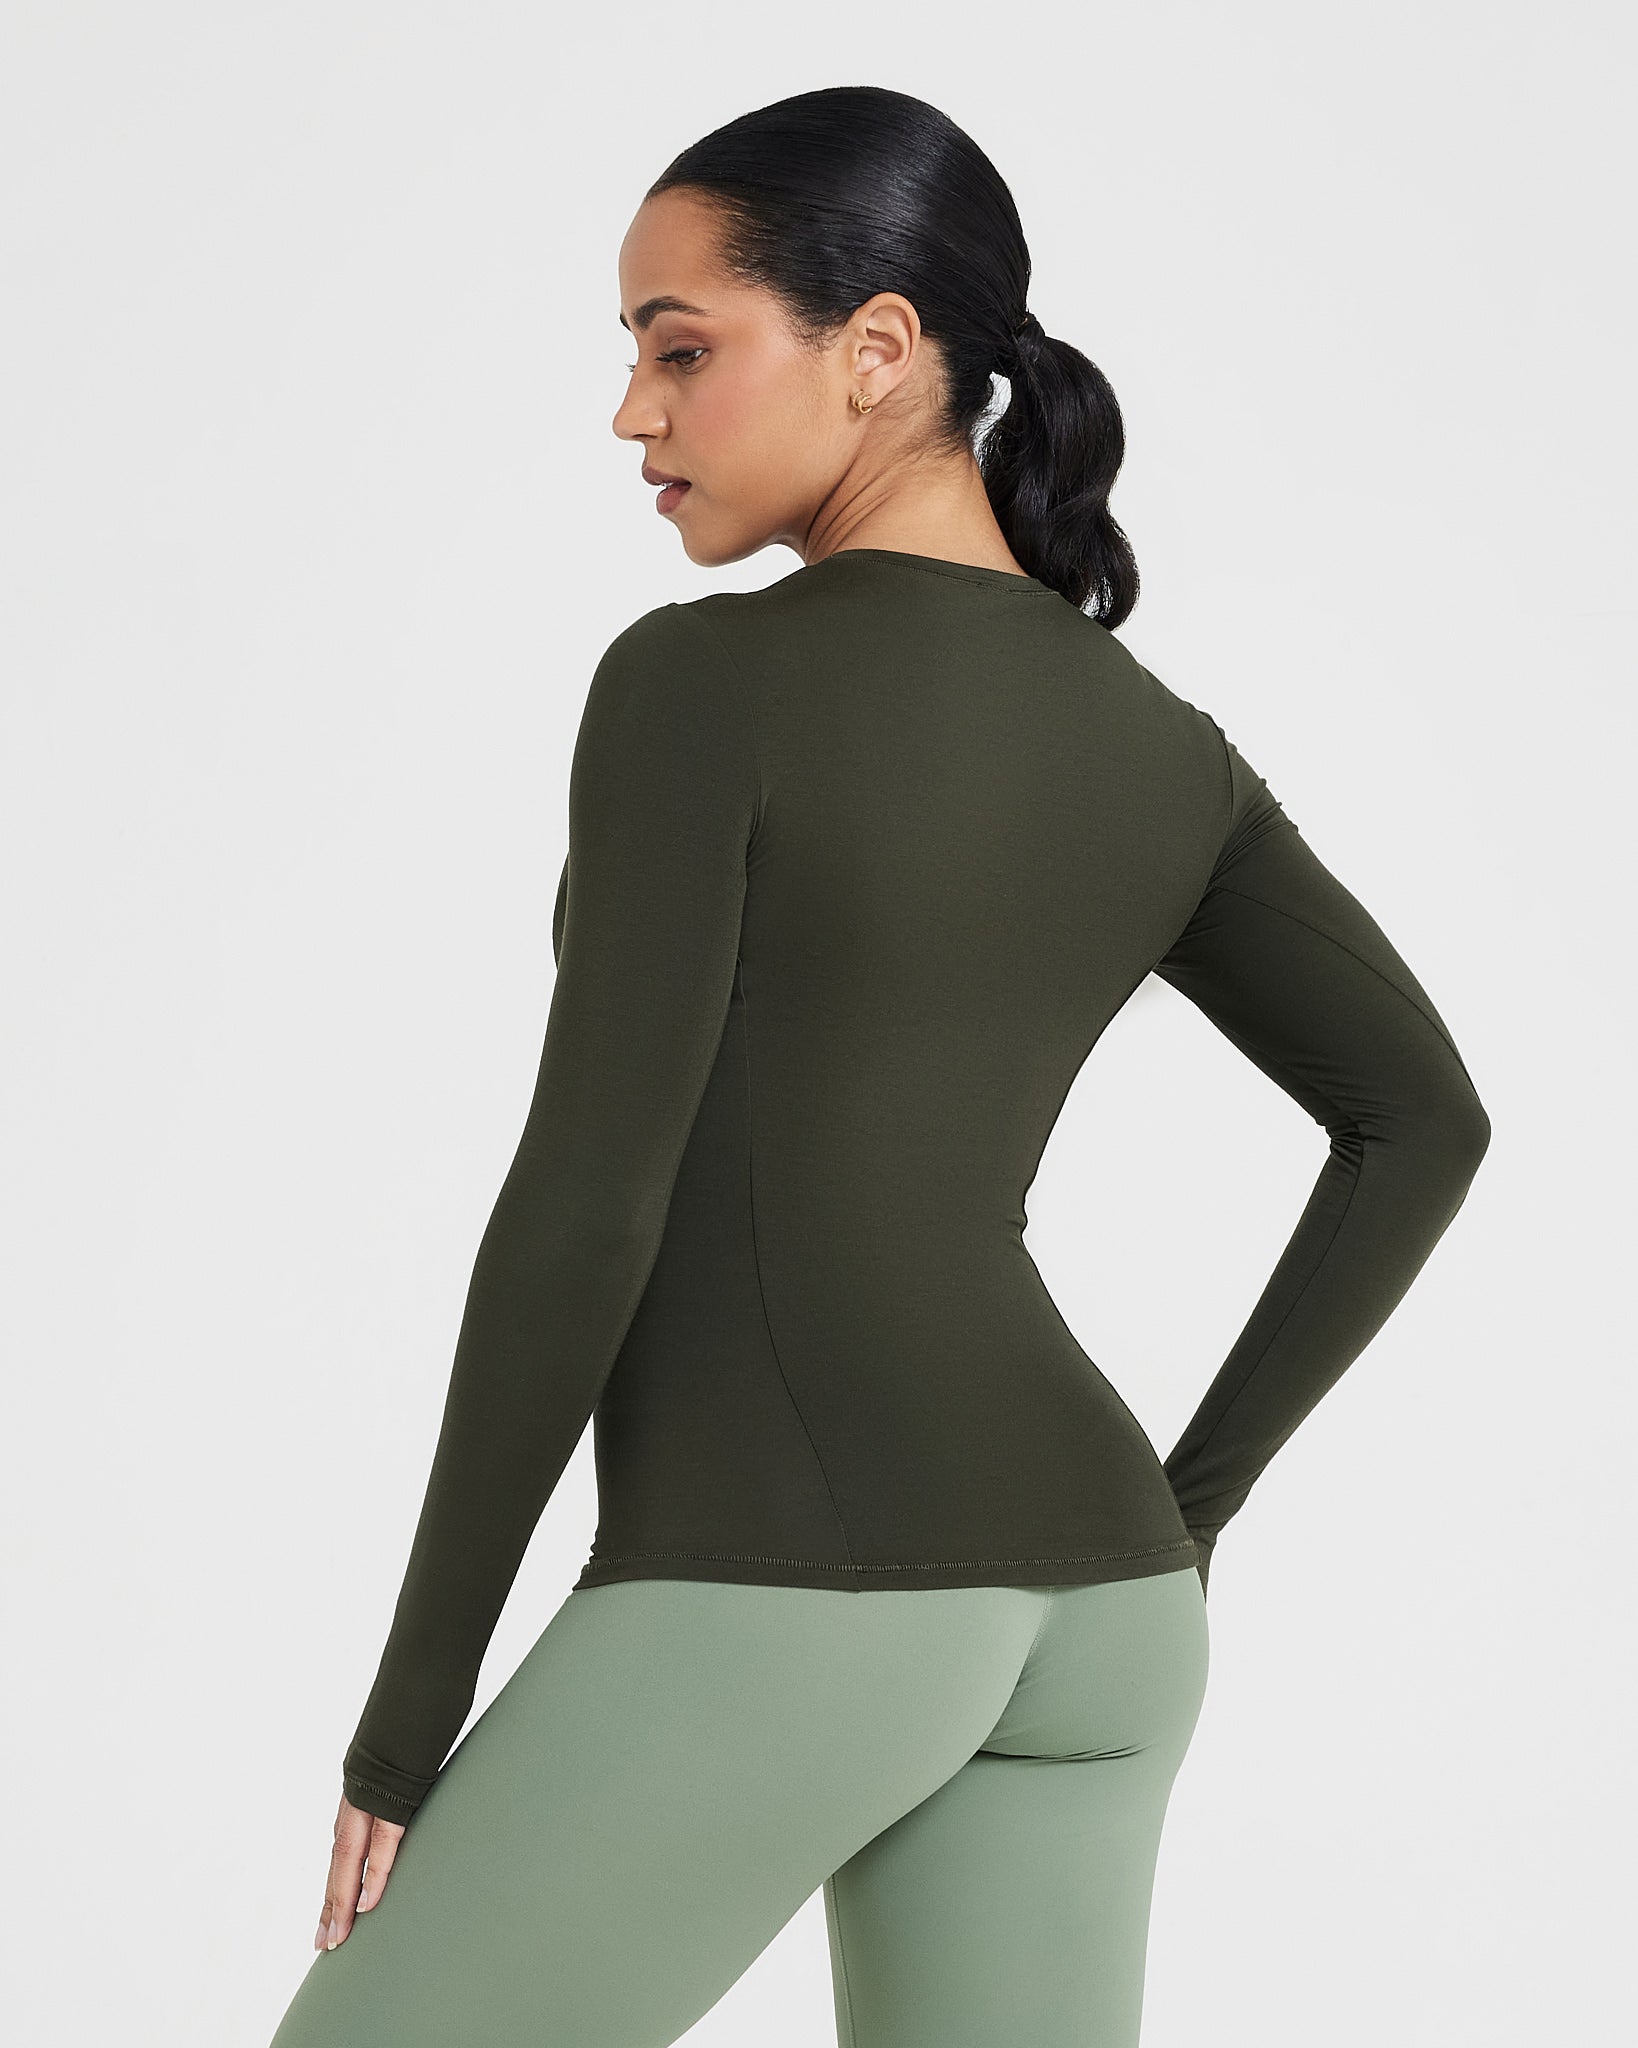 Khaki Green Long Sleeve Top Women's | Oner Active US